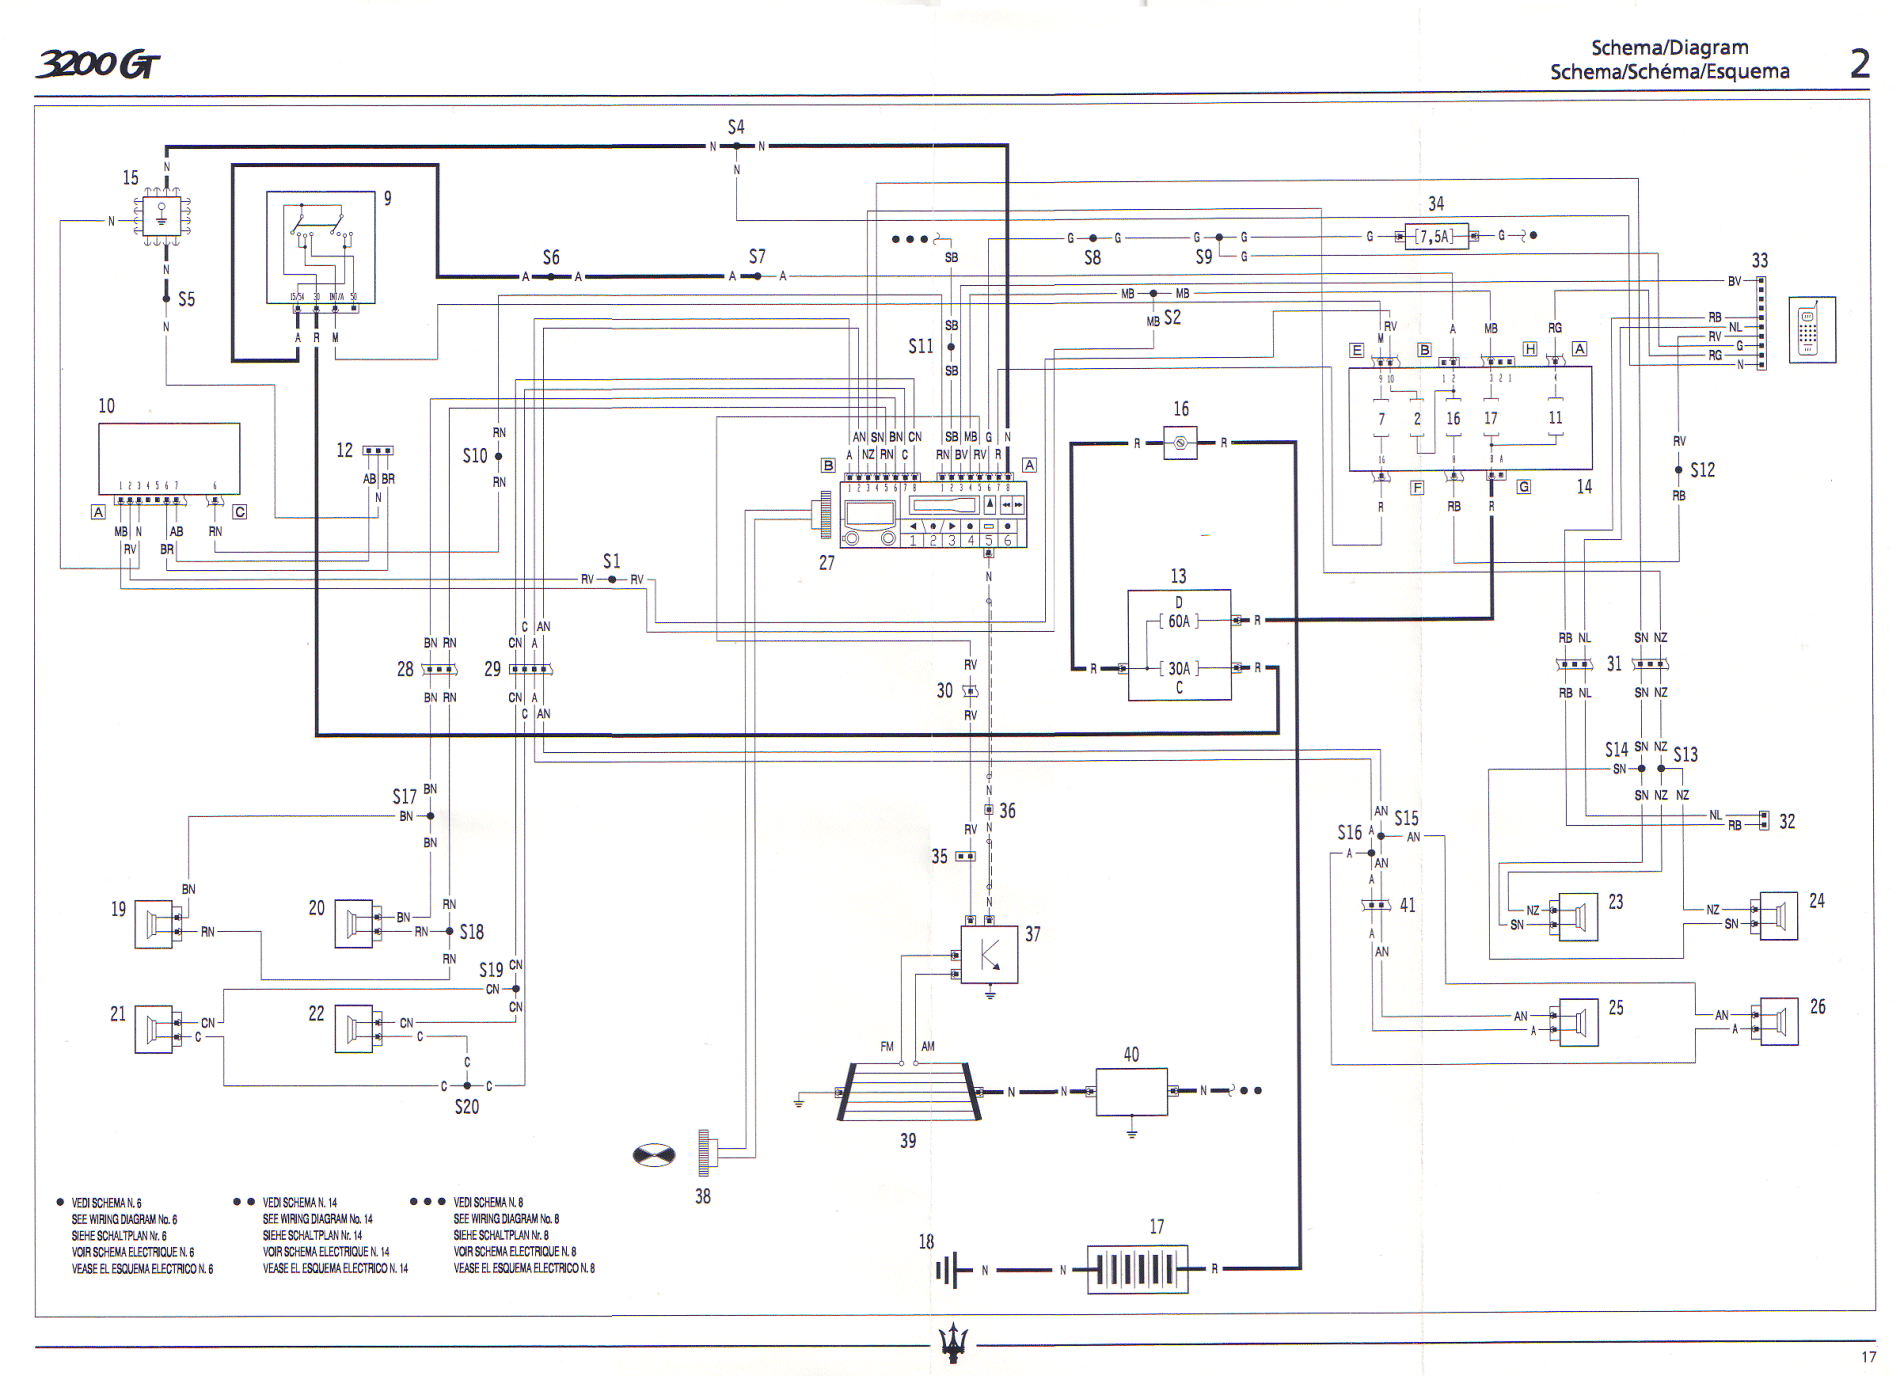 [DIAGRAM] Maserati 3200 Gt Wiring Diagram FULL Version HD Quality